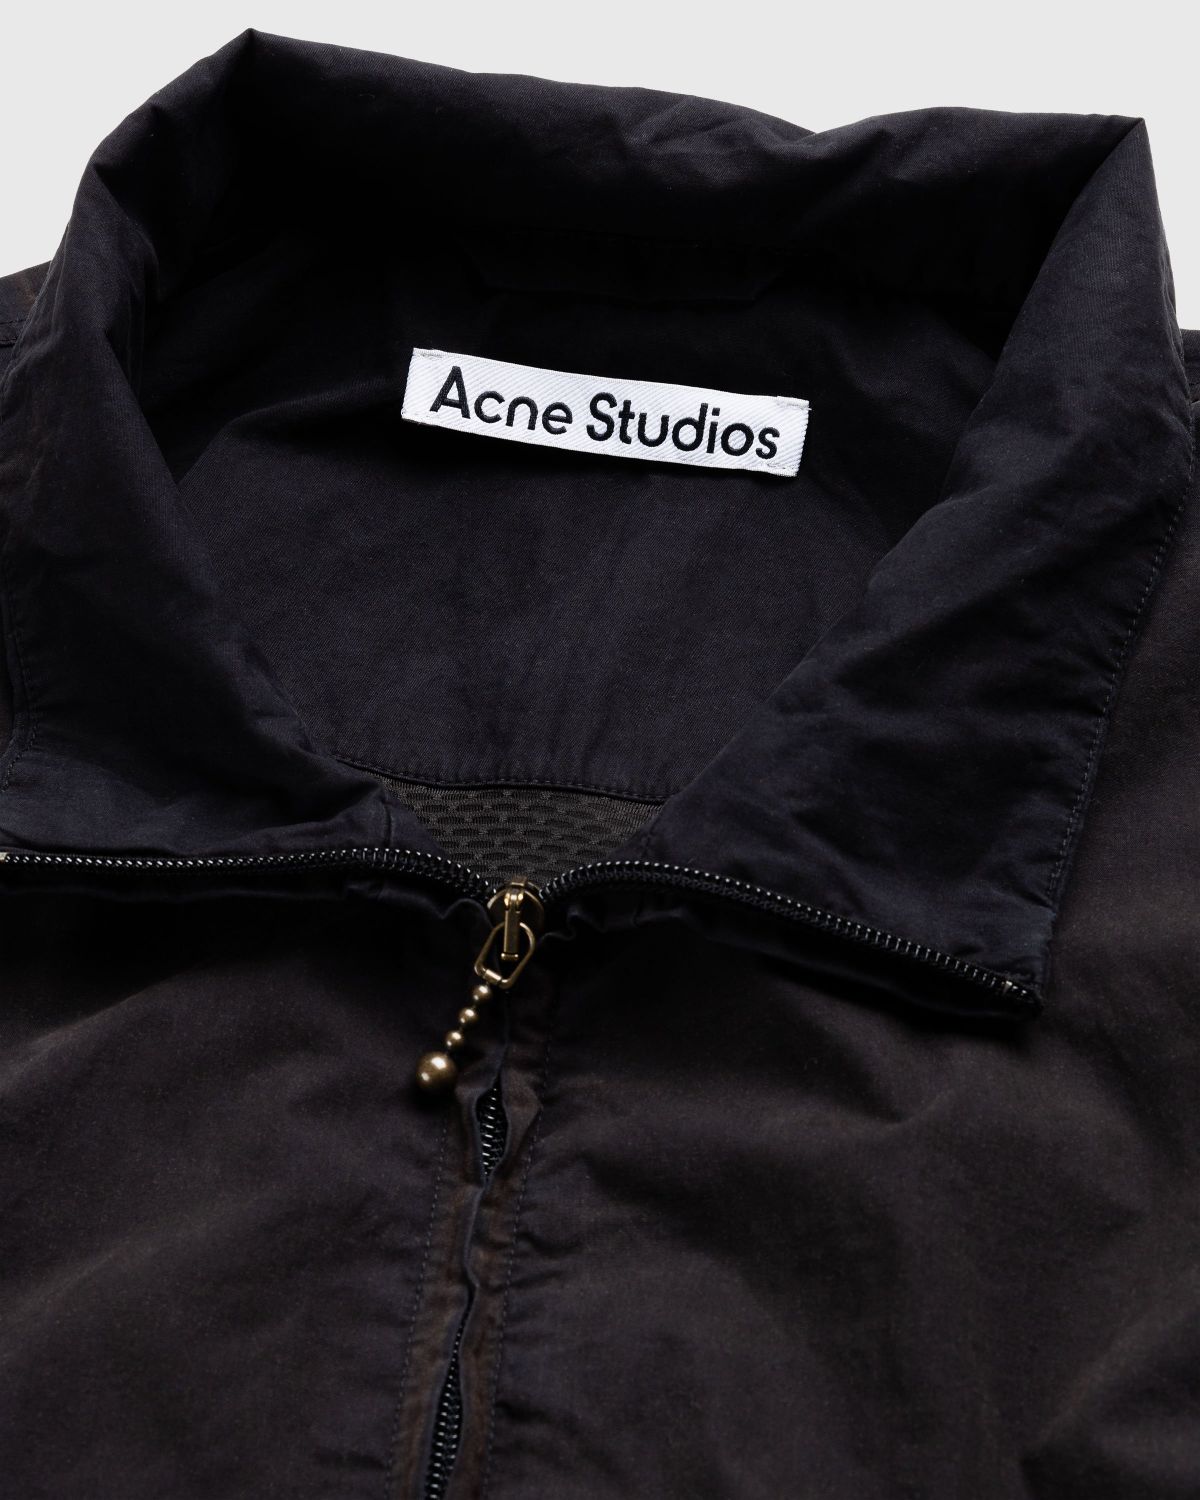 Acne Studios – Logo Zipper Jacket Black | Highsnobiety Shop